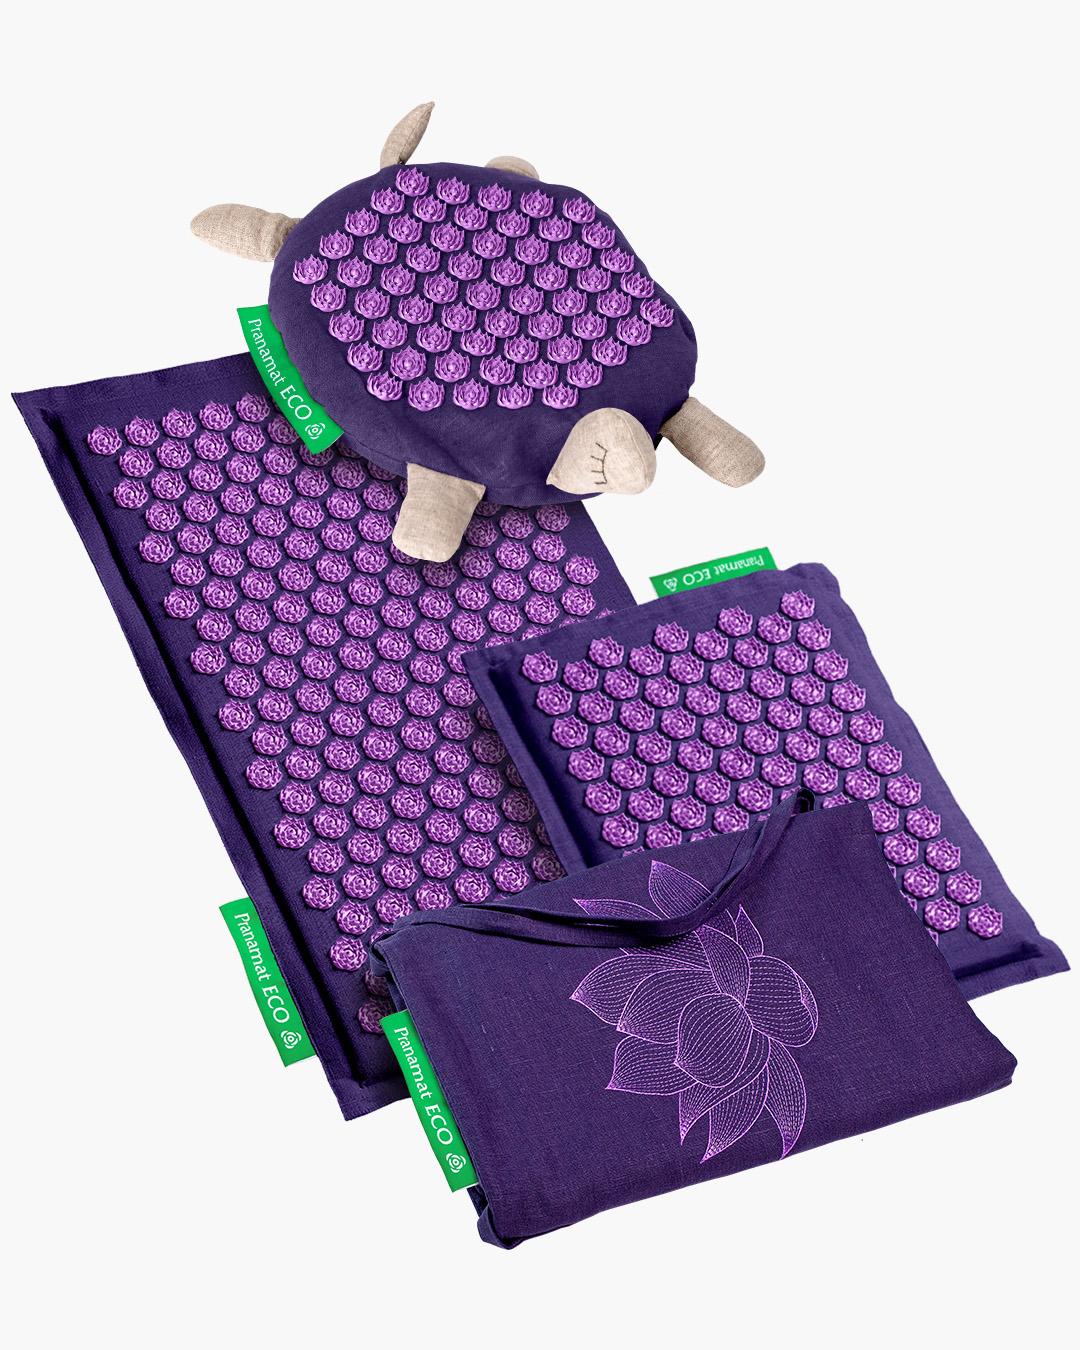 Pranamat ECO + Pranamat ECO Schildkröte + Mini + XL Tasche Violett & Violett